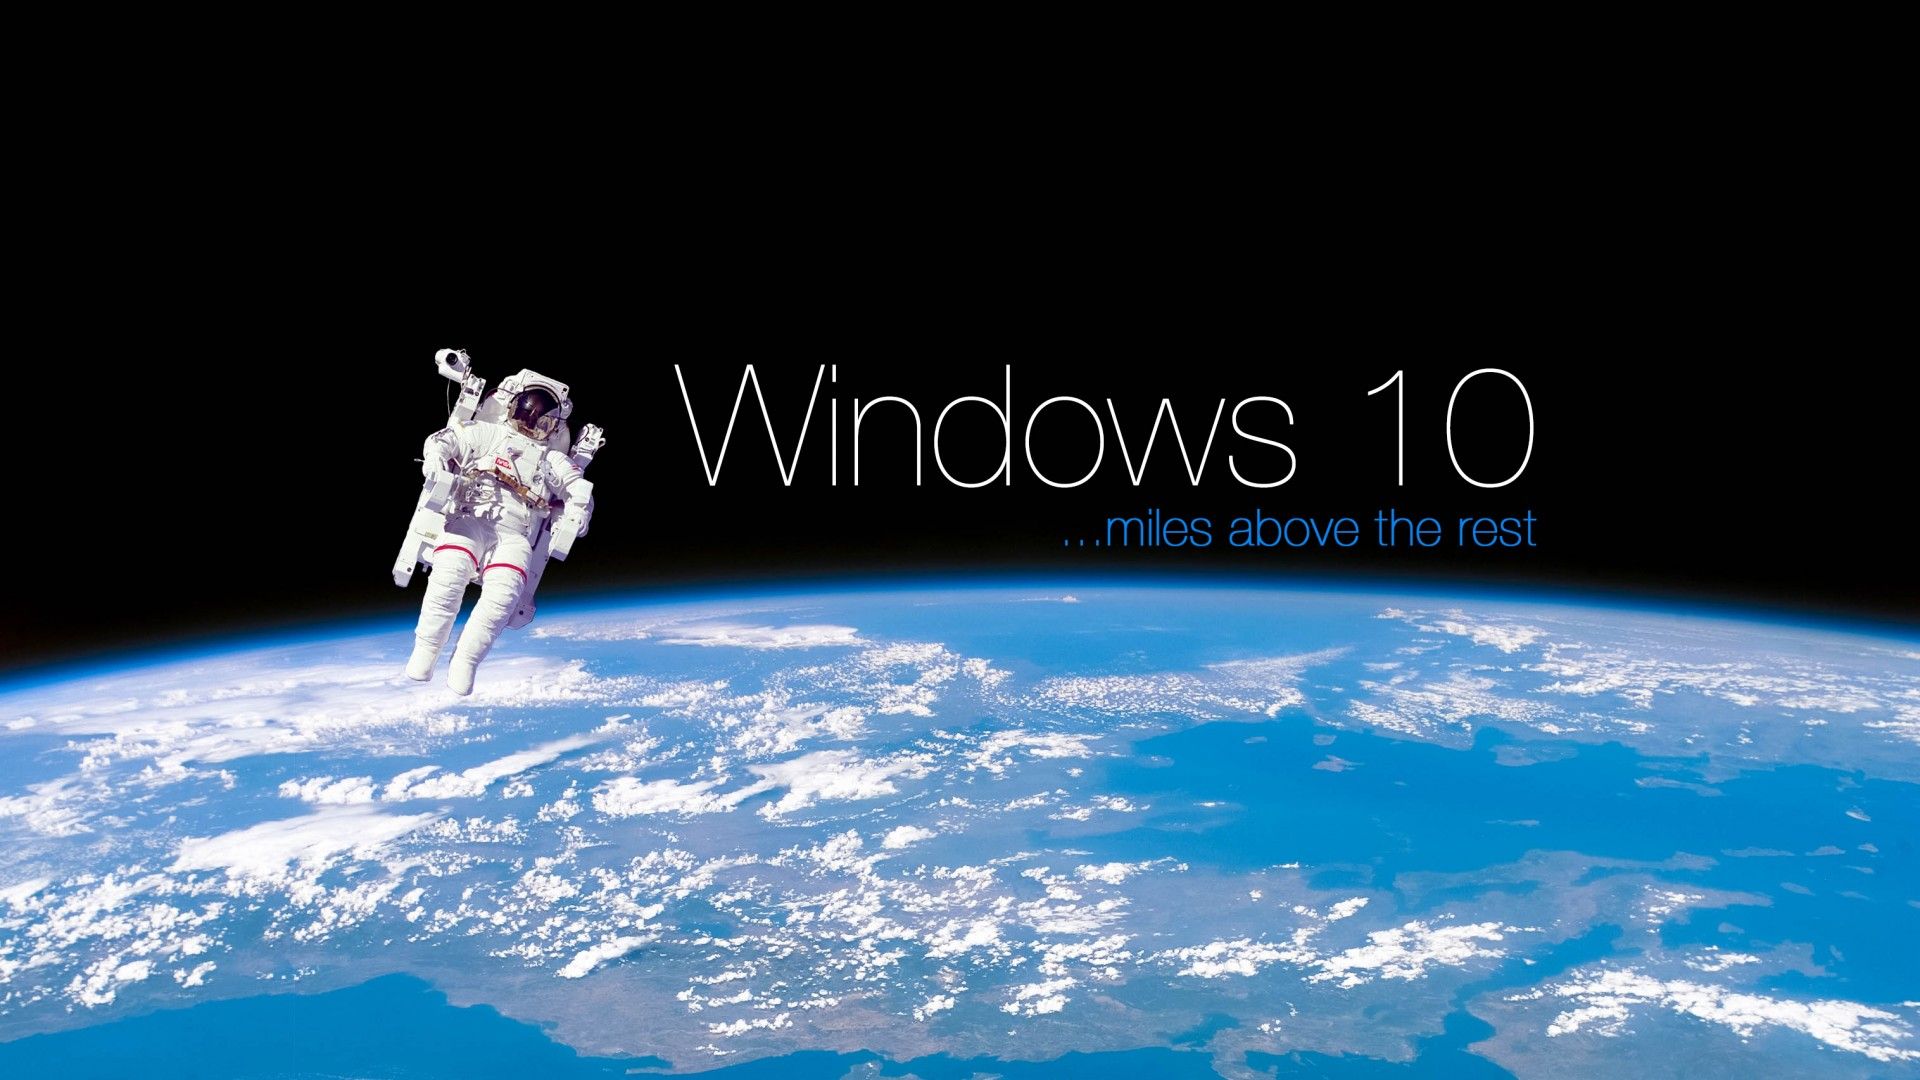 Windows 10 Space 4k Wallpaper 19x1080 1080p Wallpaper